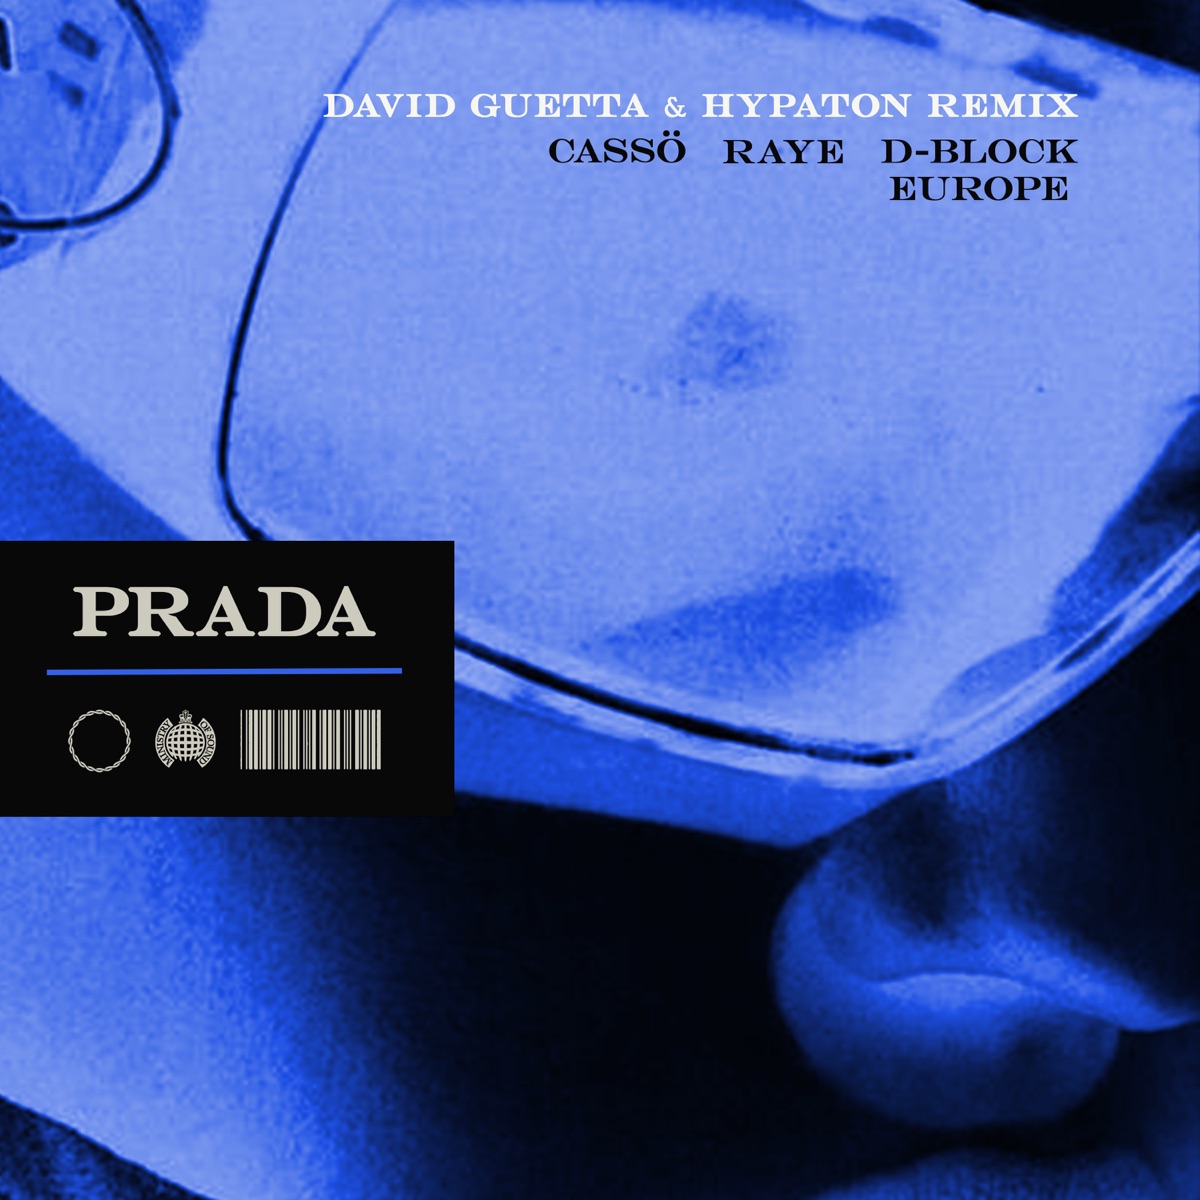 Prada - Single - Album by cassö, RAYE & D-Block Europe - Apple Music